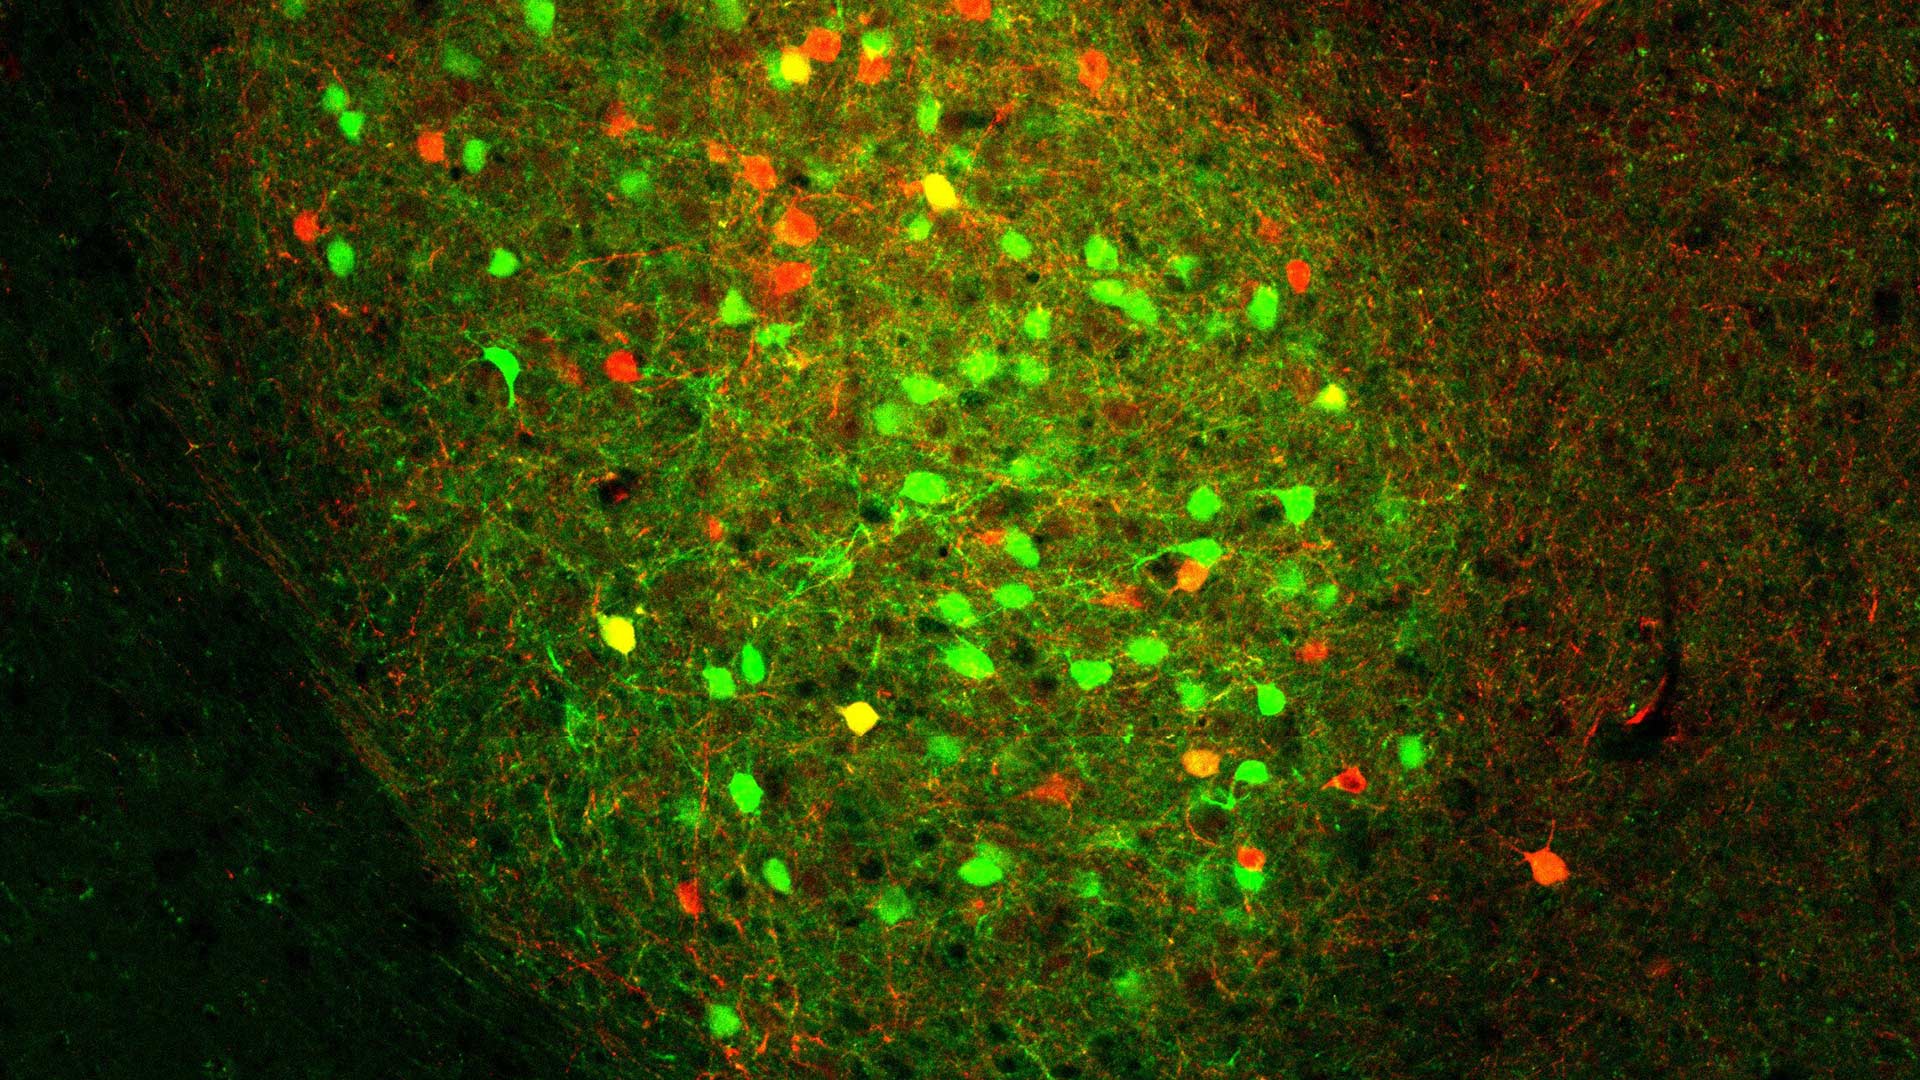 image of a mouse basolateral amygdala inside the brain